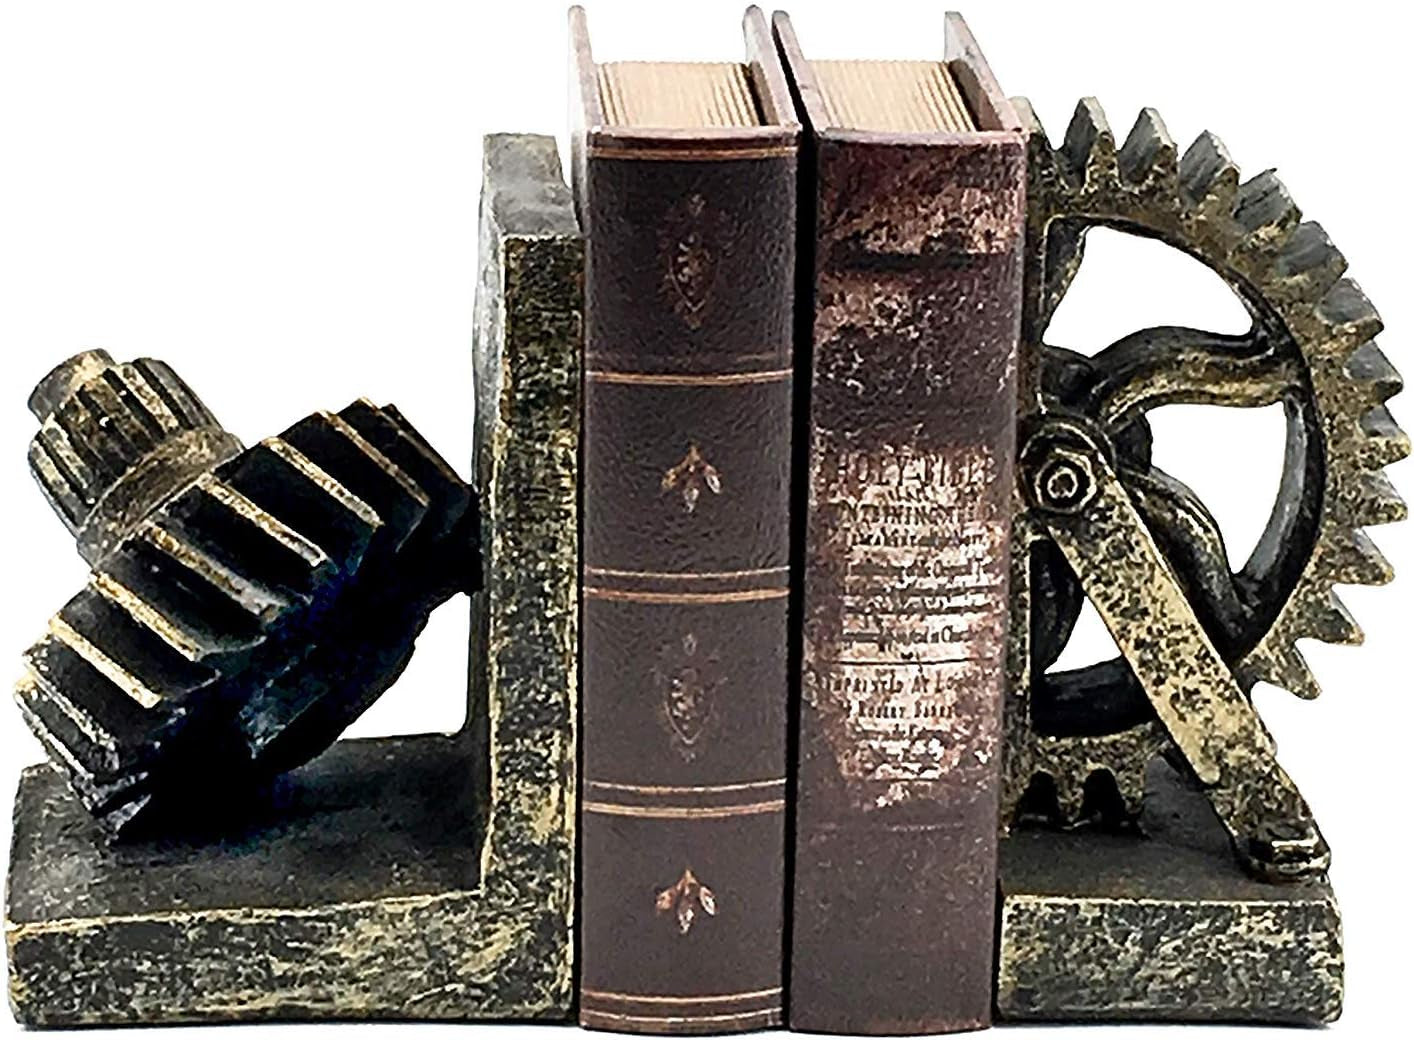 Decorative Bookend Gear Book Ends Industrial Rustic Vintage Unique Heavy Statues Bookshelves Support Home Decor Accents (Large)